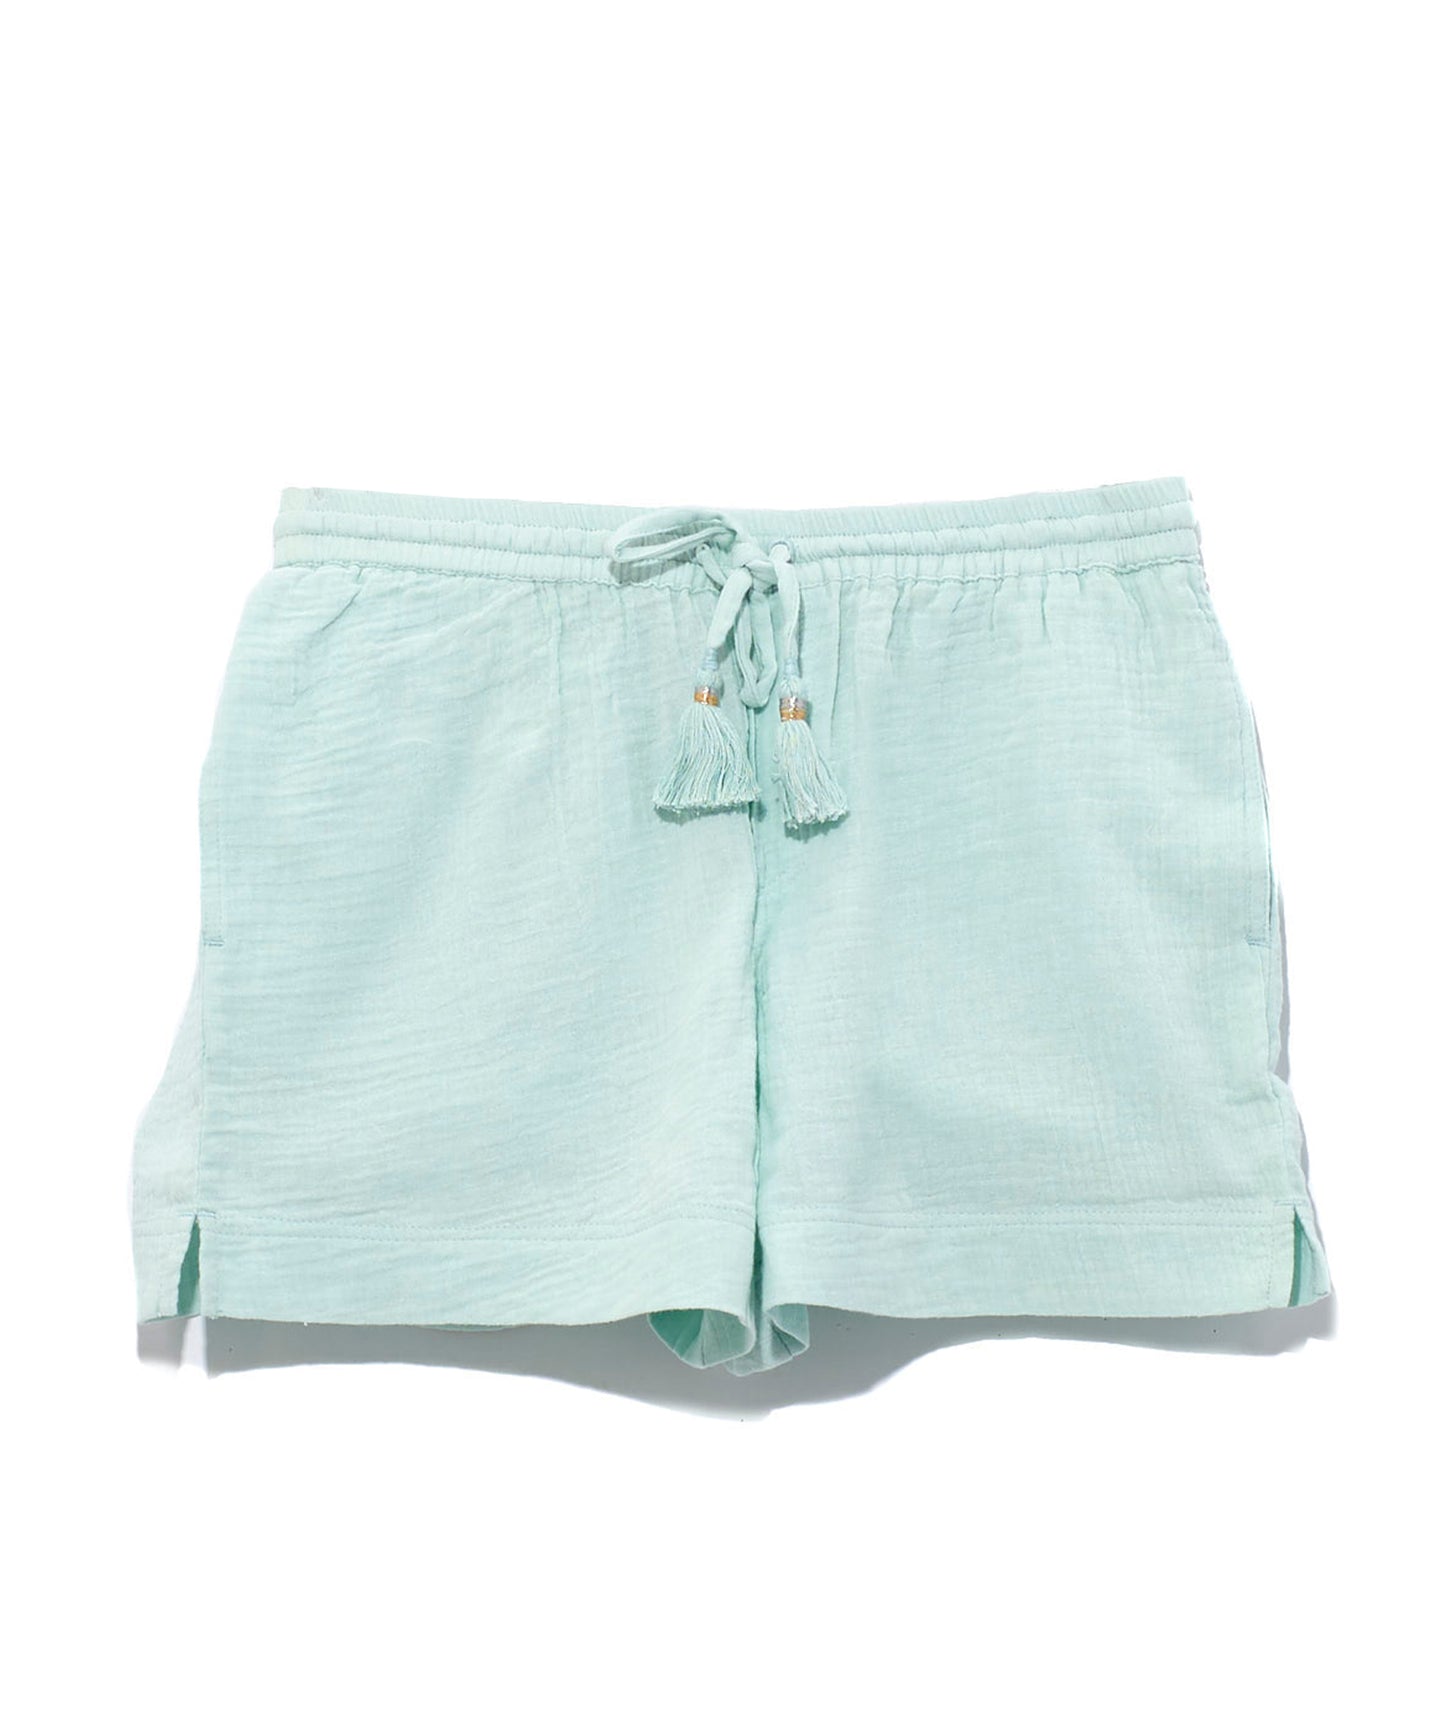 Double Gauze Beach Shorts in color Beach Glass